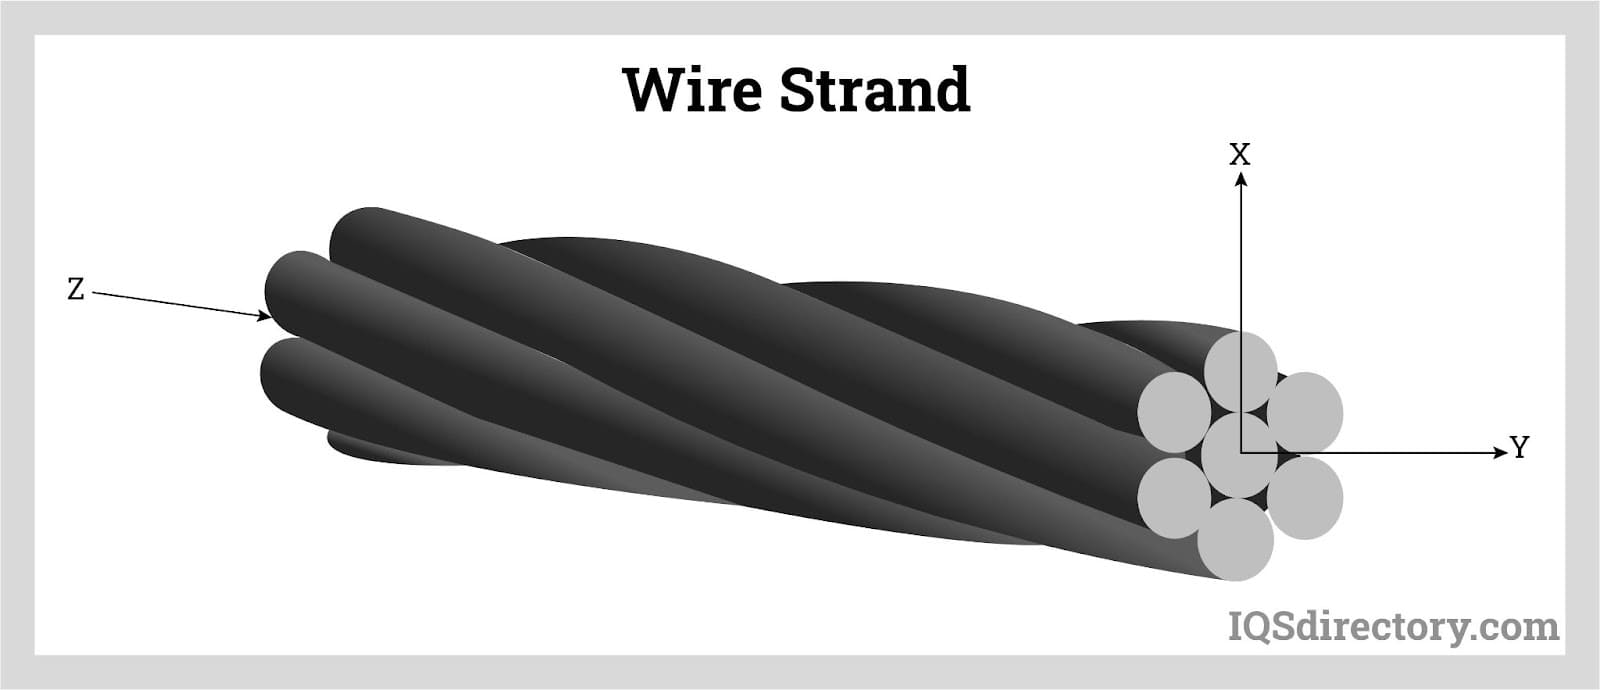 Wire Strand